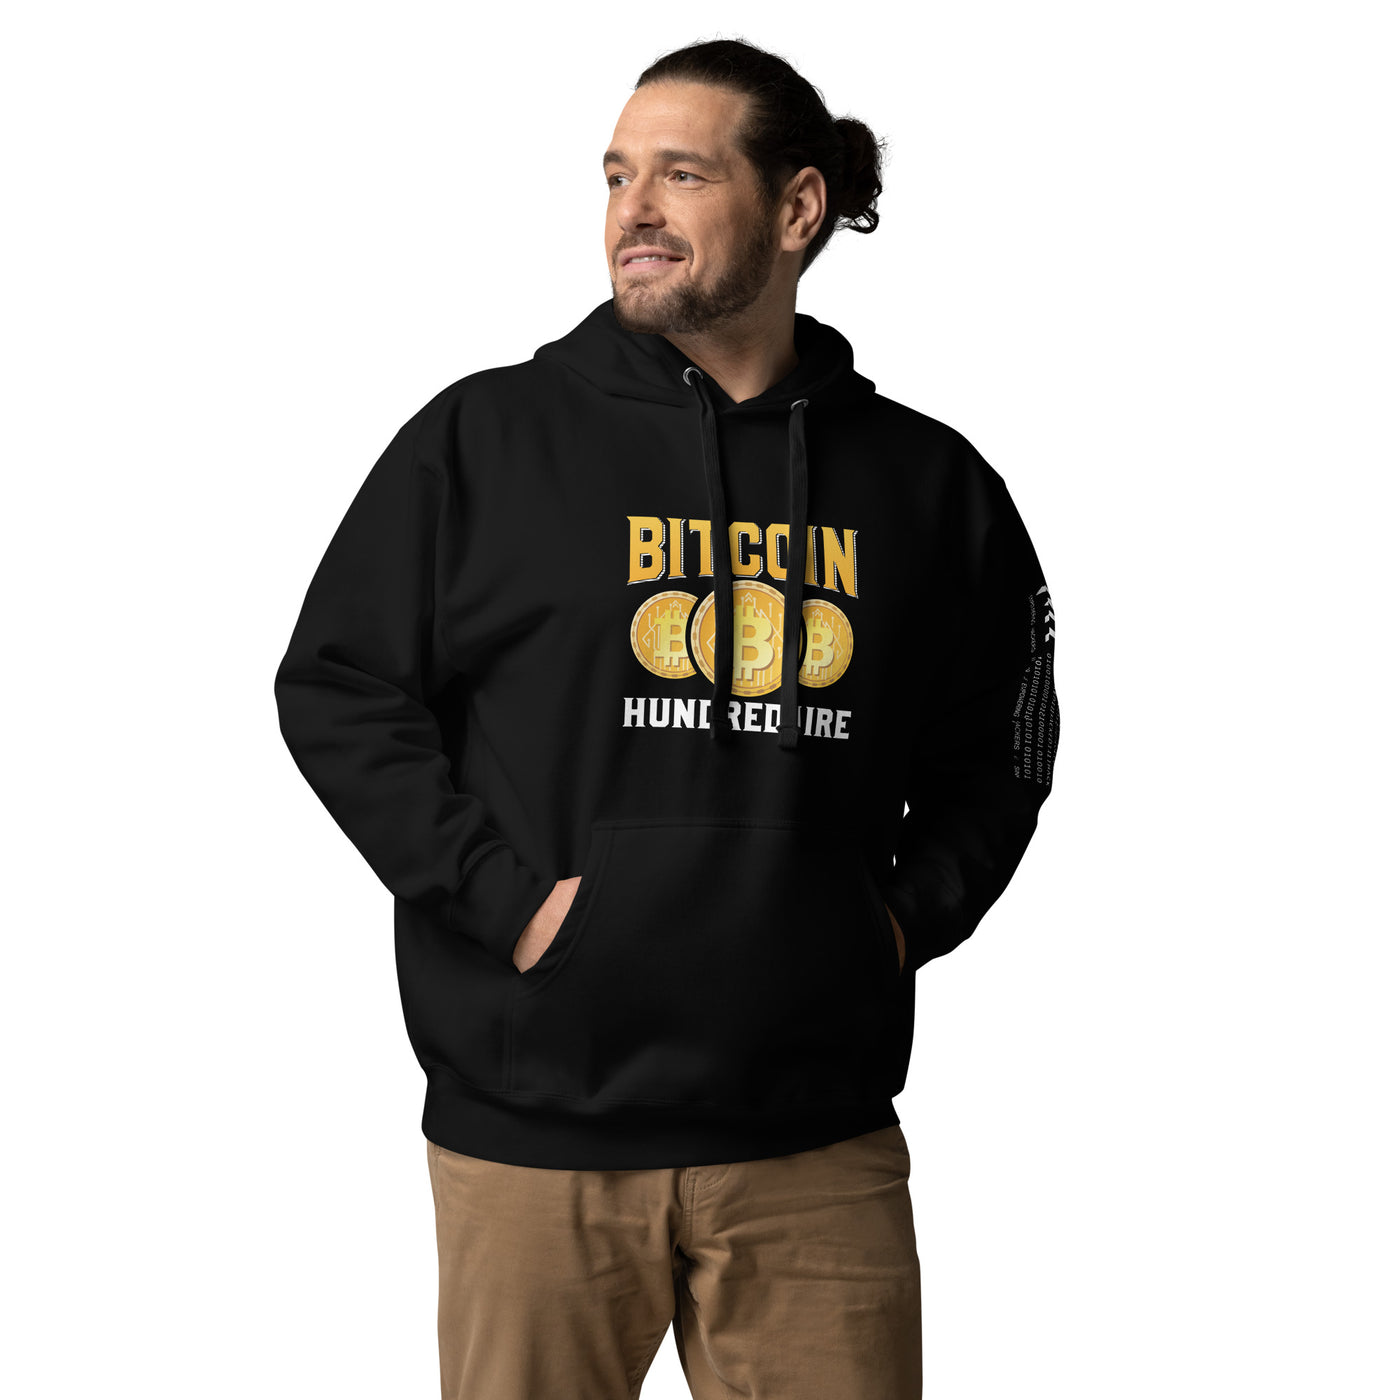 Bitcoin Hundredaire - Unisex Hoodie